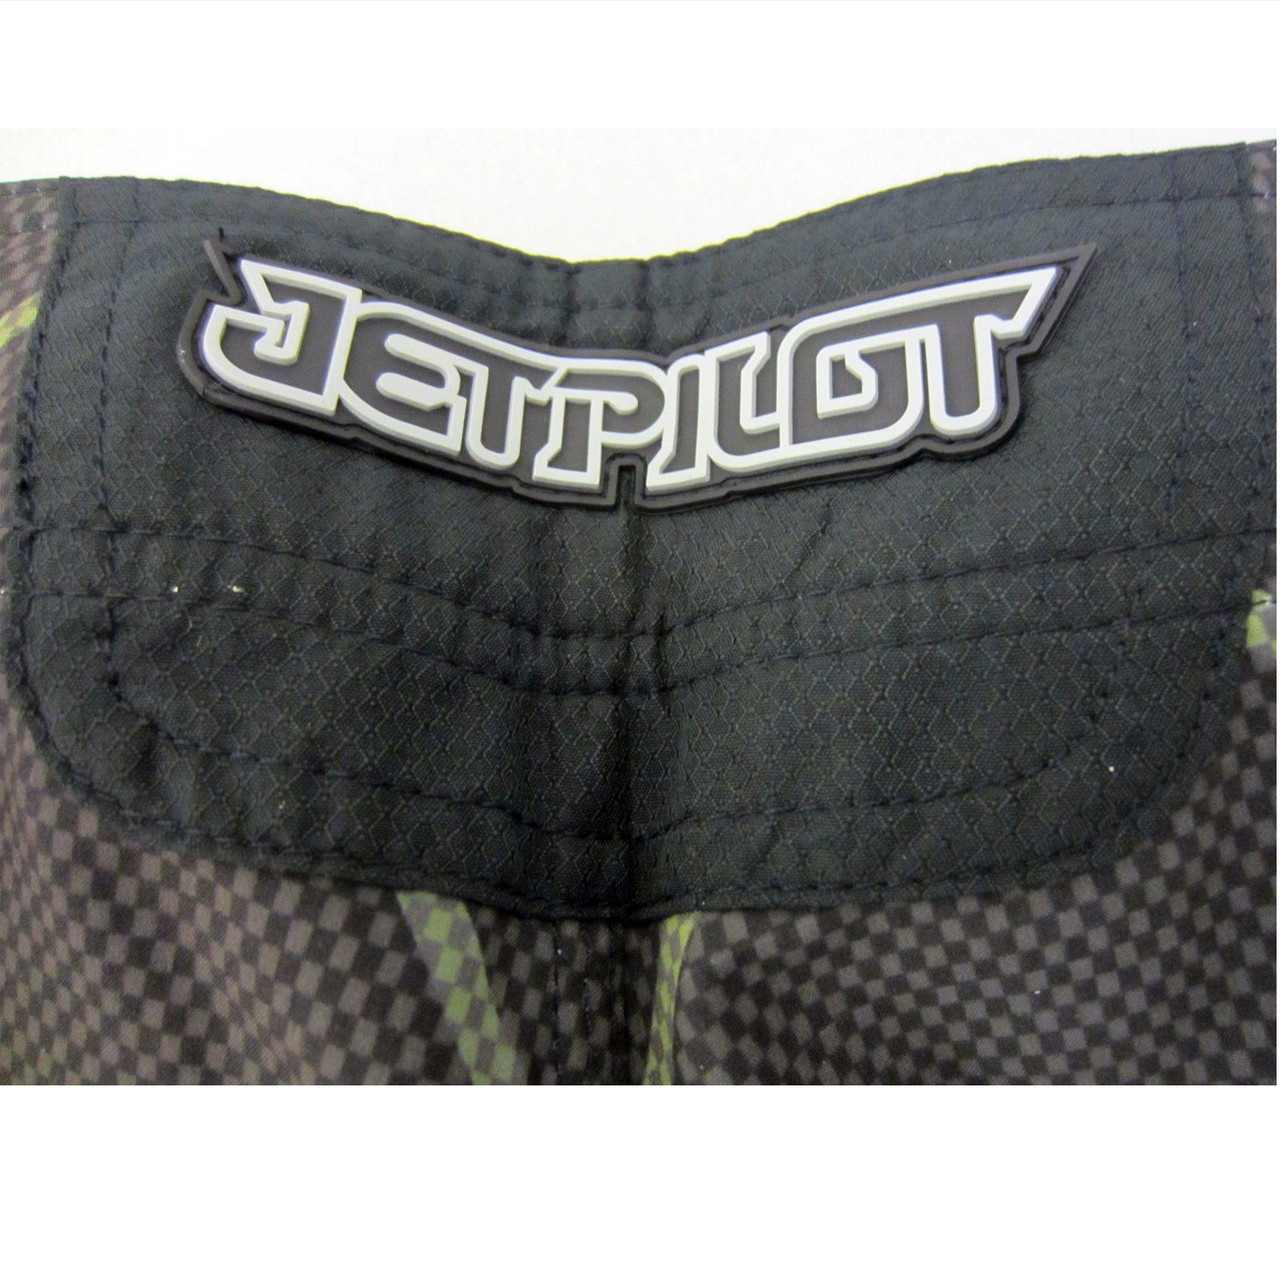 JetPilot New Mens Jet Fighter Boardshorts Swim Suit Trunks Black/Green Size 30